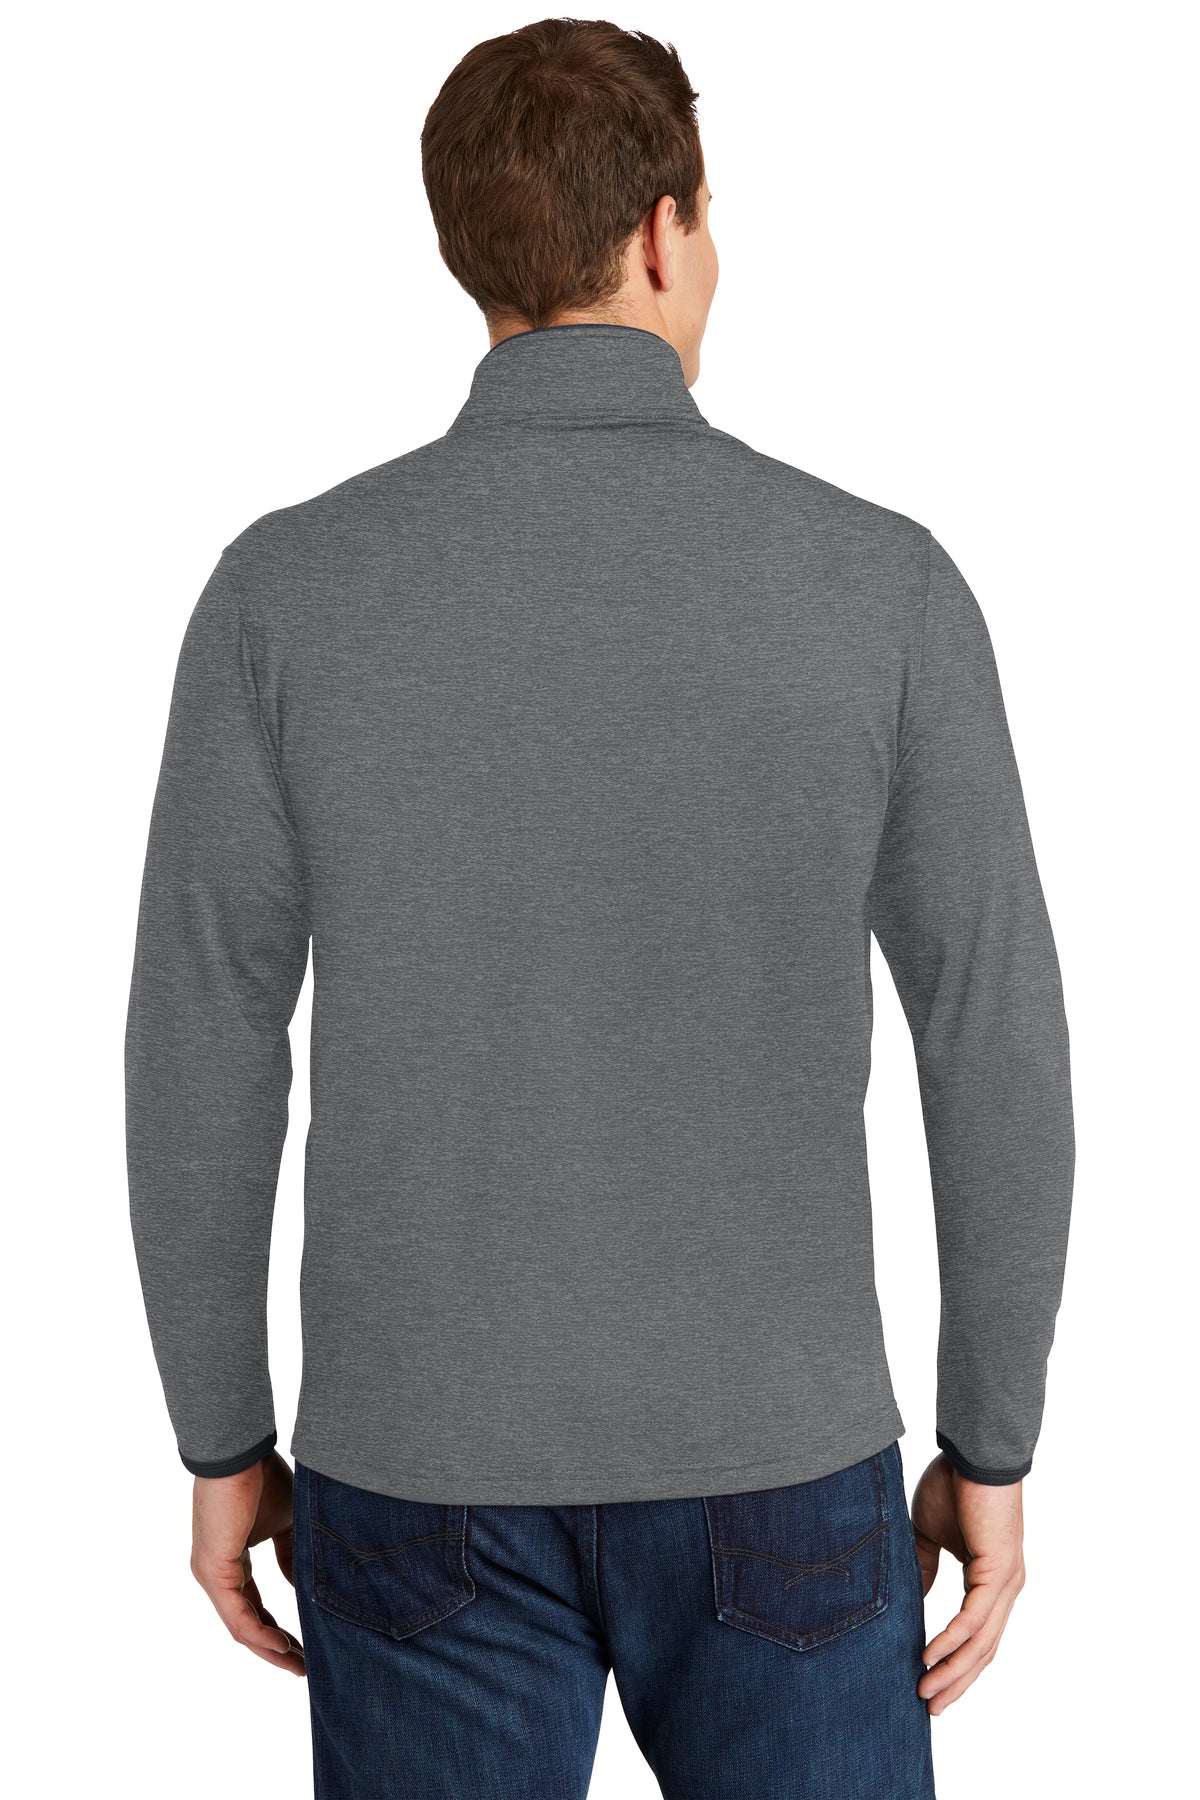 sport-tek_st853 _charcoal grey heather/ charcoal grey_company_logo_sweatshirts